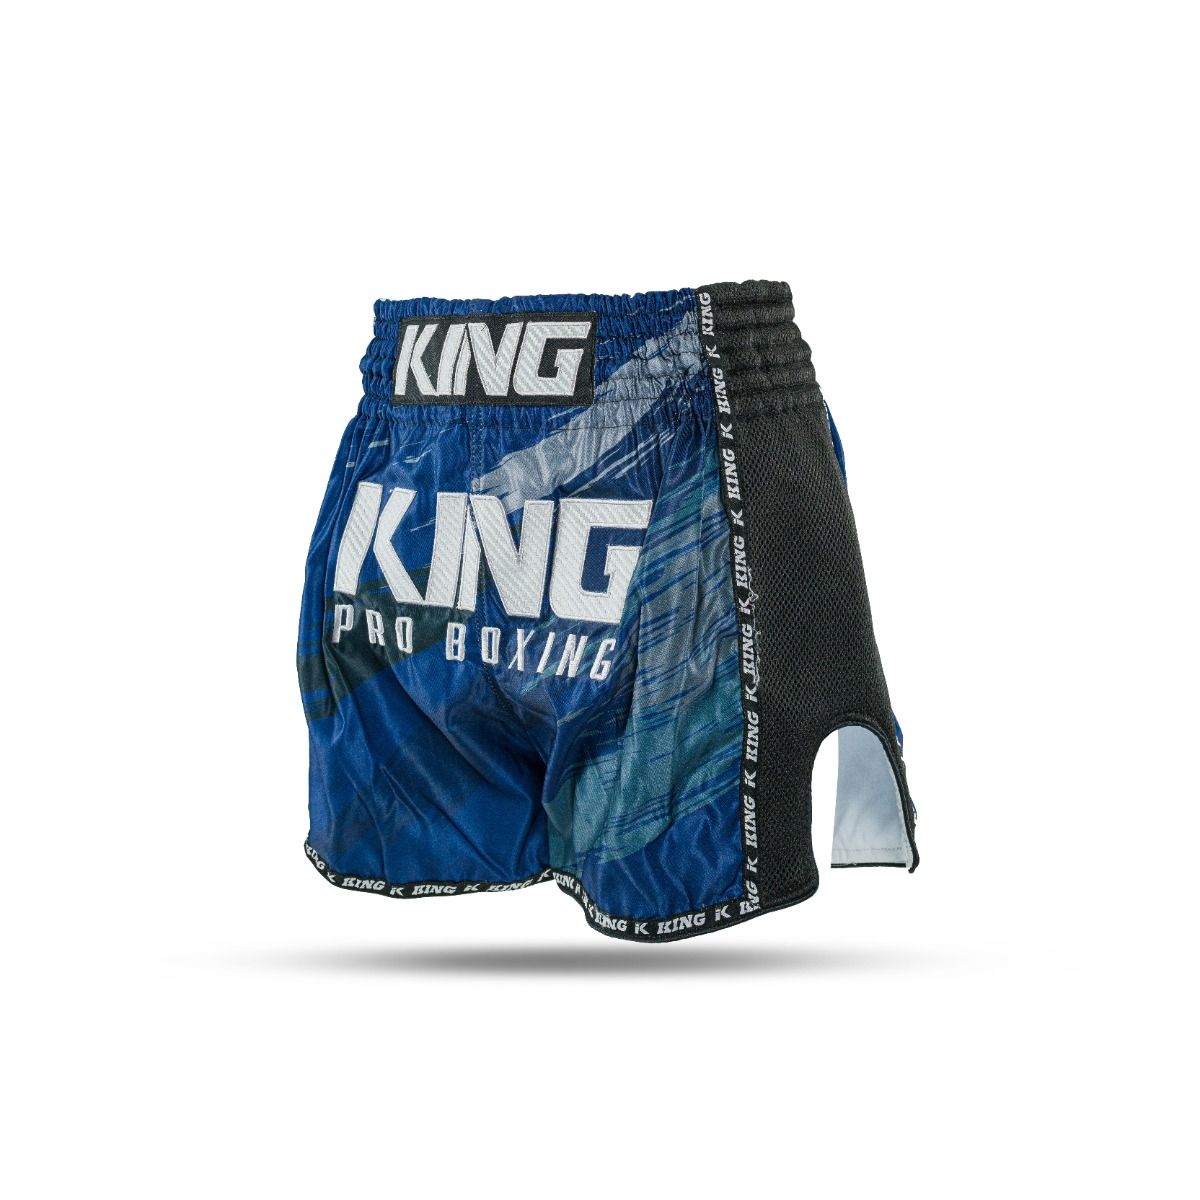 King PRO boxing muay Thai trunk - KPB STORM 4